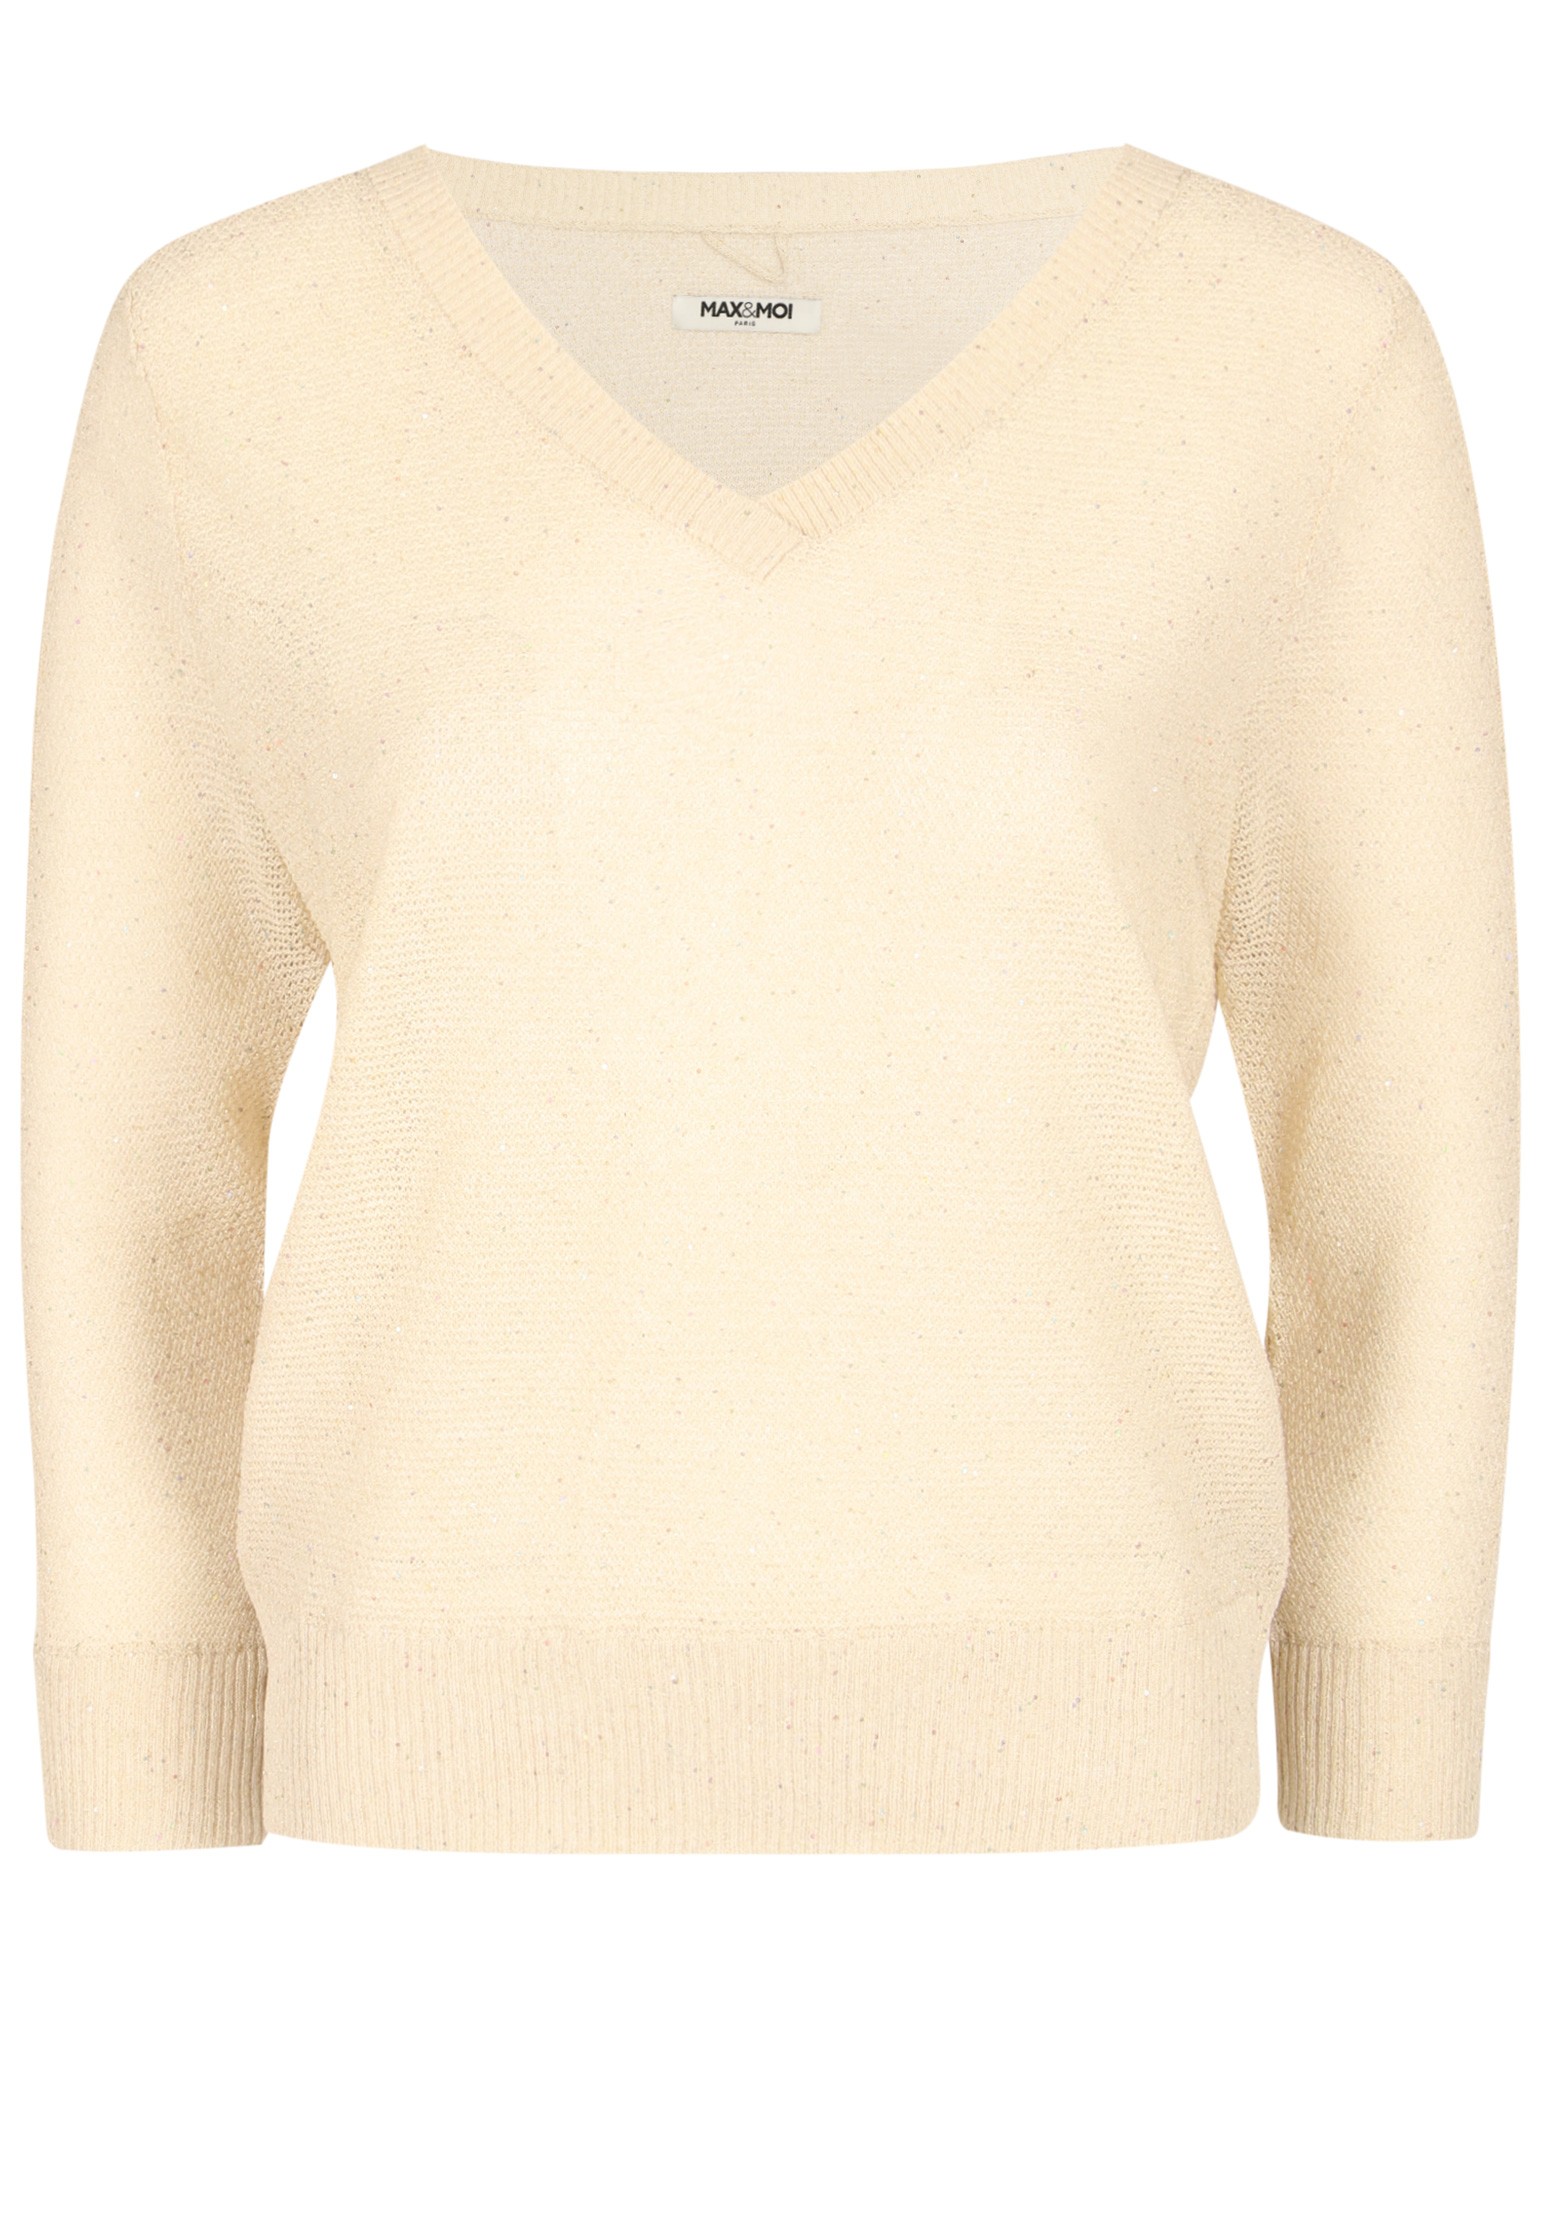 Пуловер женский 128109 бежевый XL MAX & MOI. Цвет: бежевый